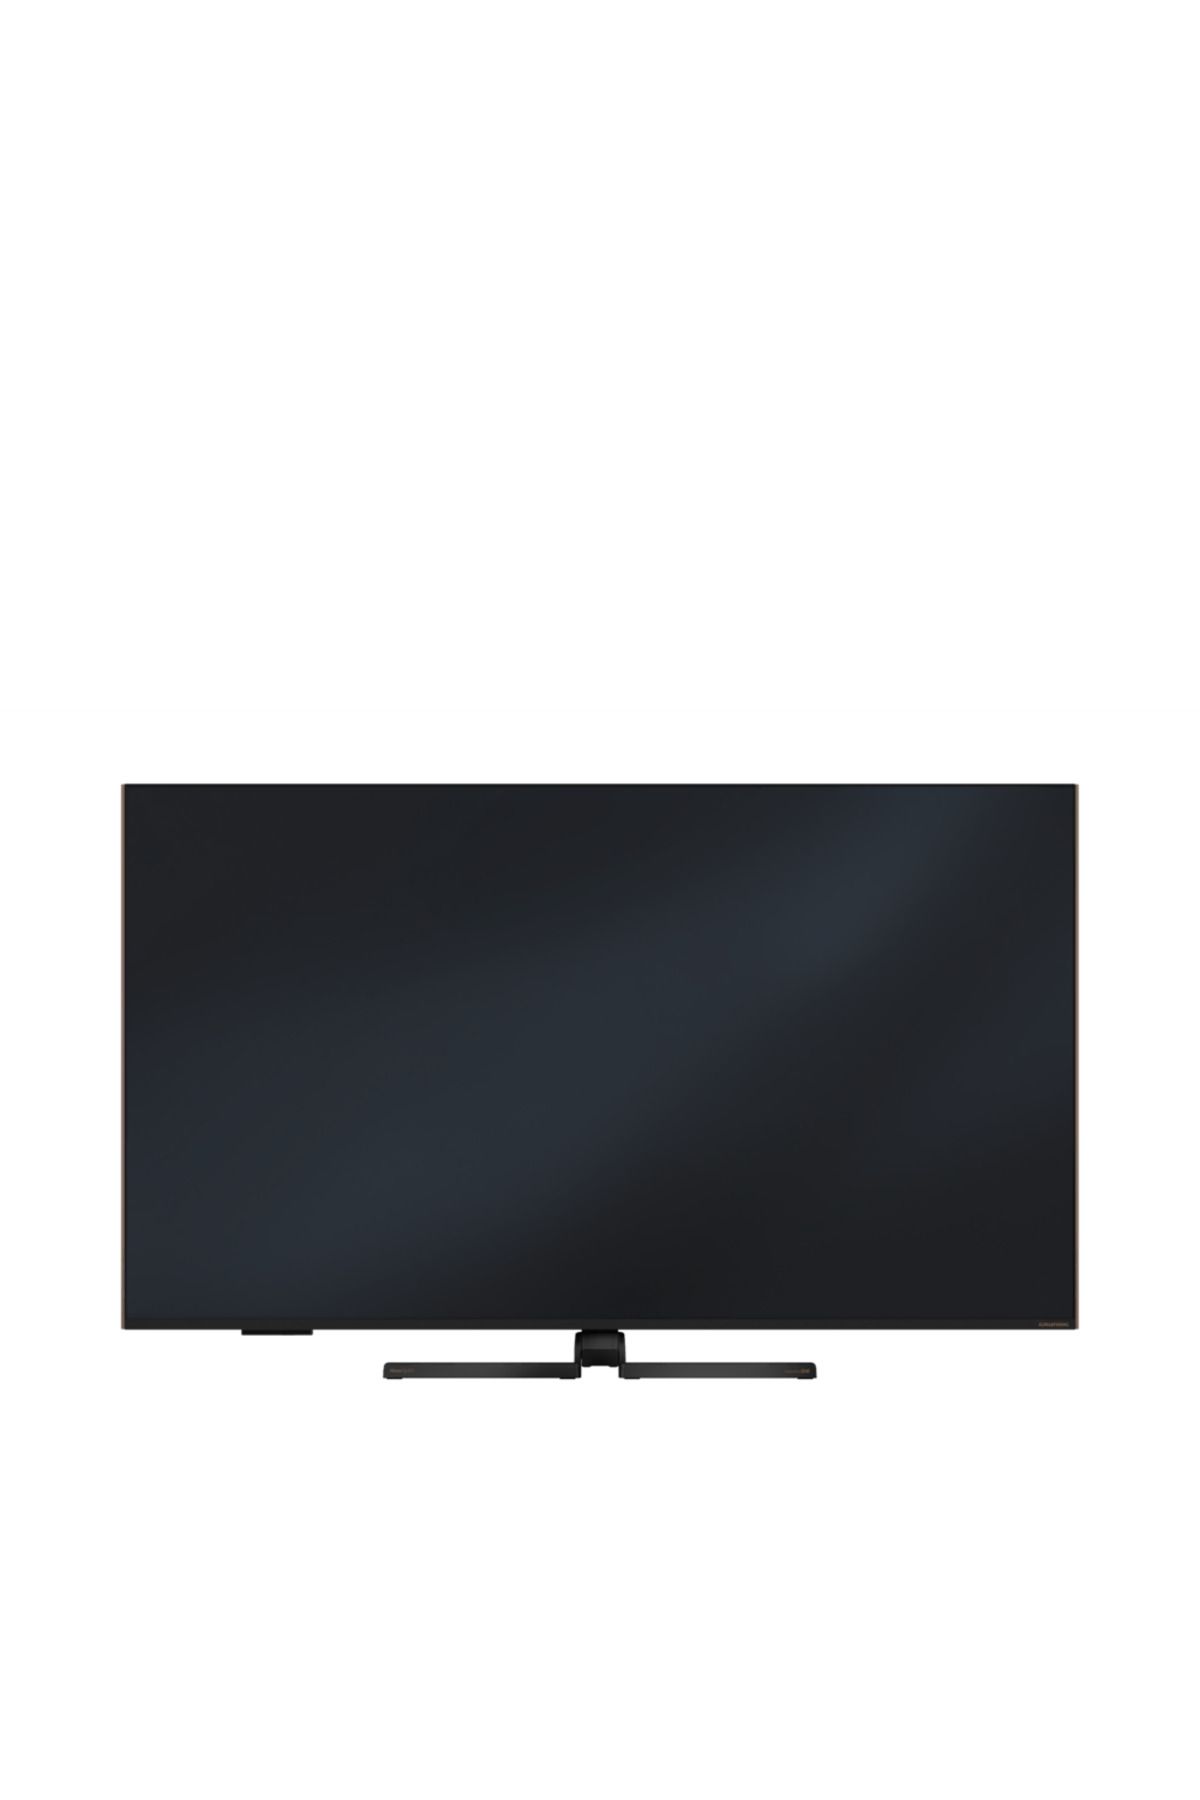 Grundig MONACO 65 GHQ 9550 Google TV